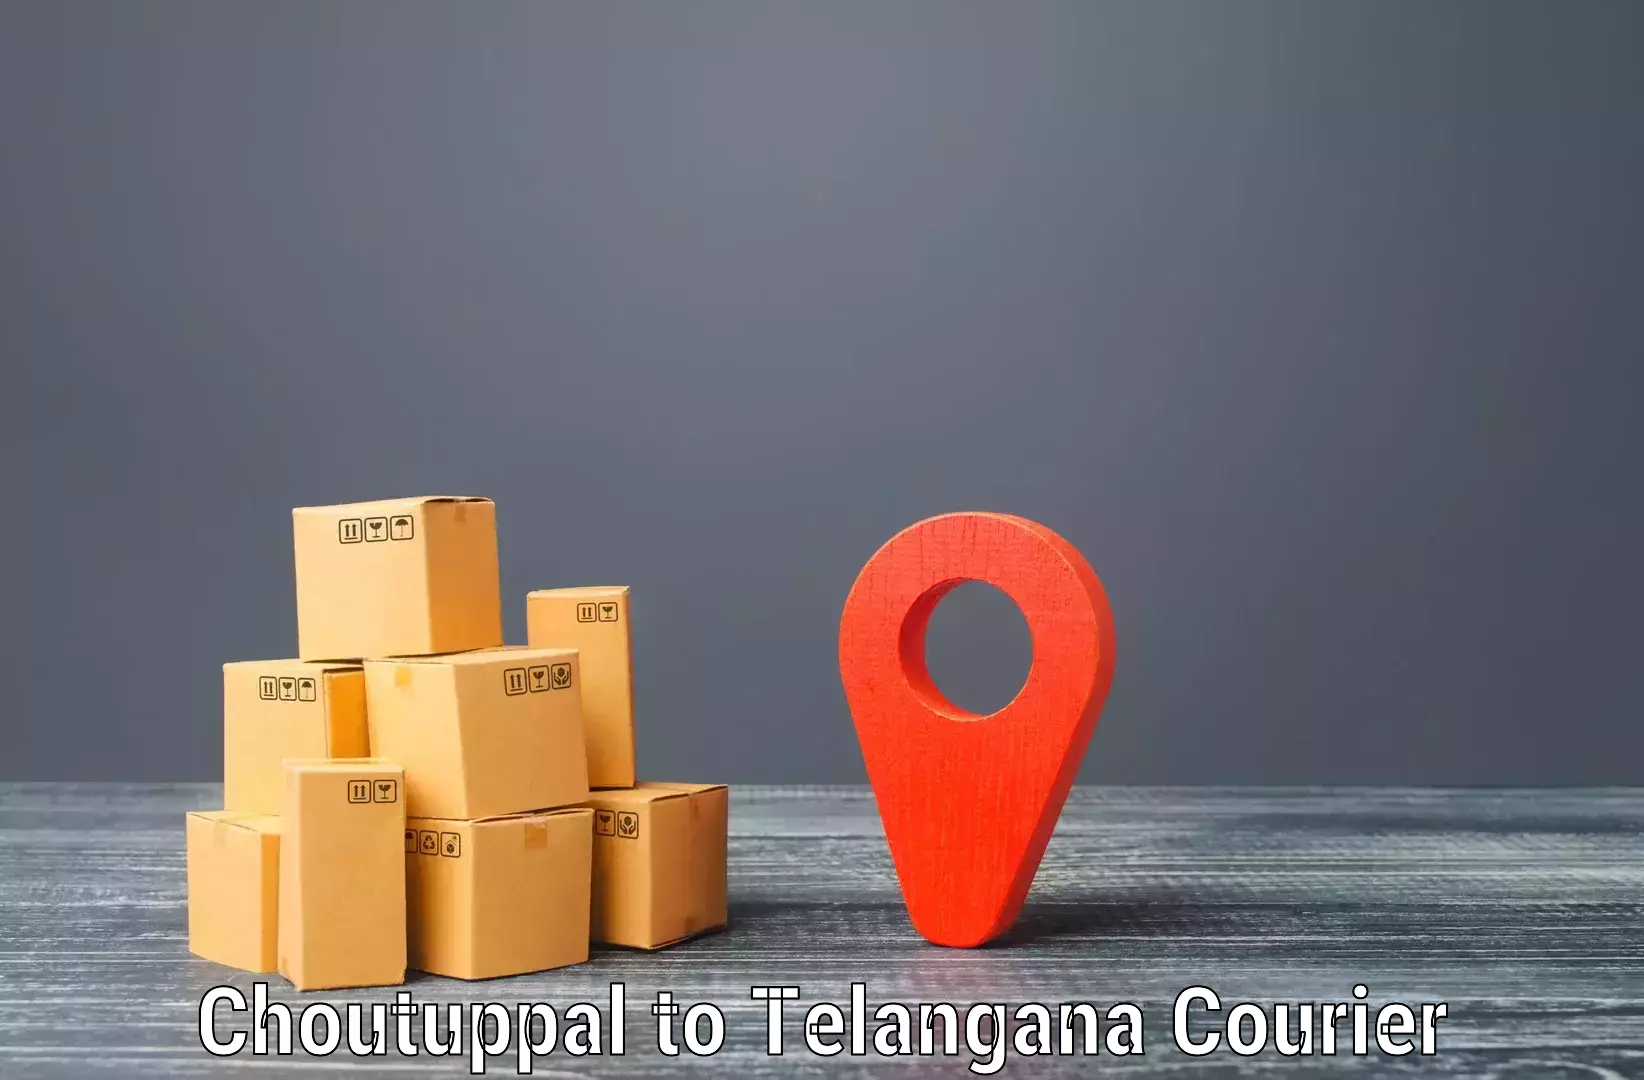 Customer-centric shipping Choutuppal to Warangal